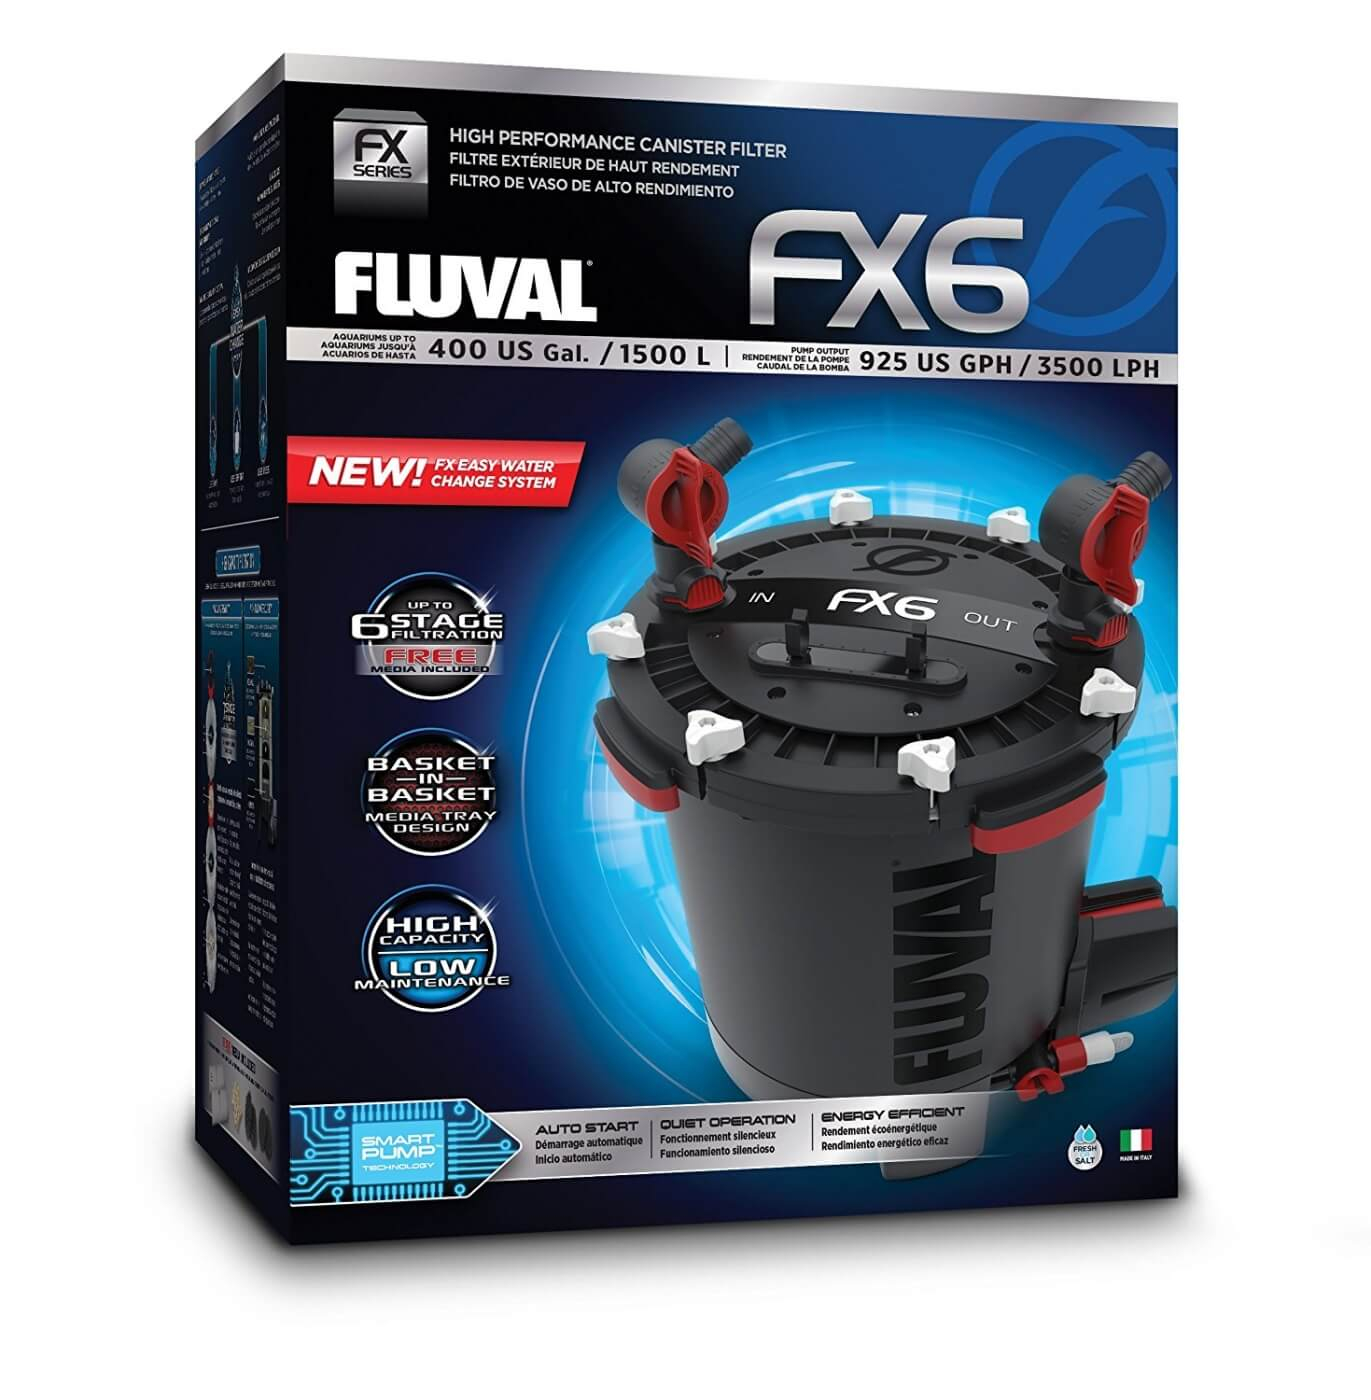 Filtro externo FX6 Fluval até 1500 L